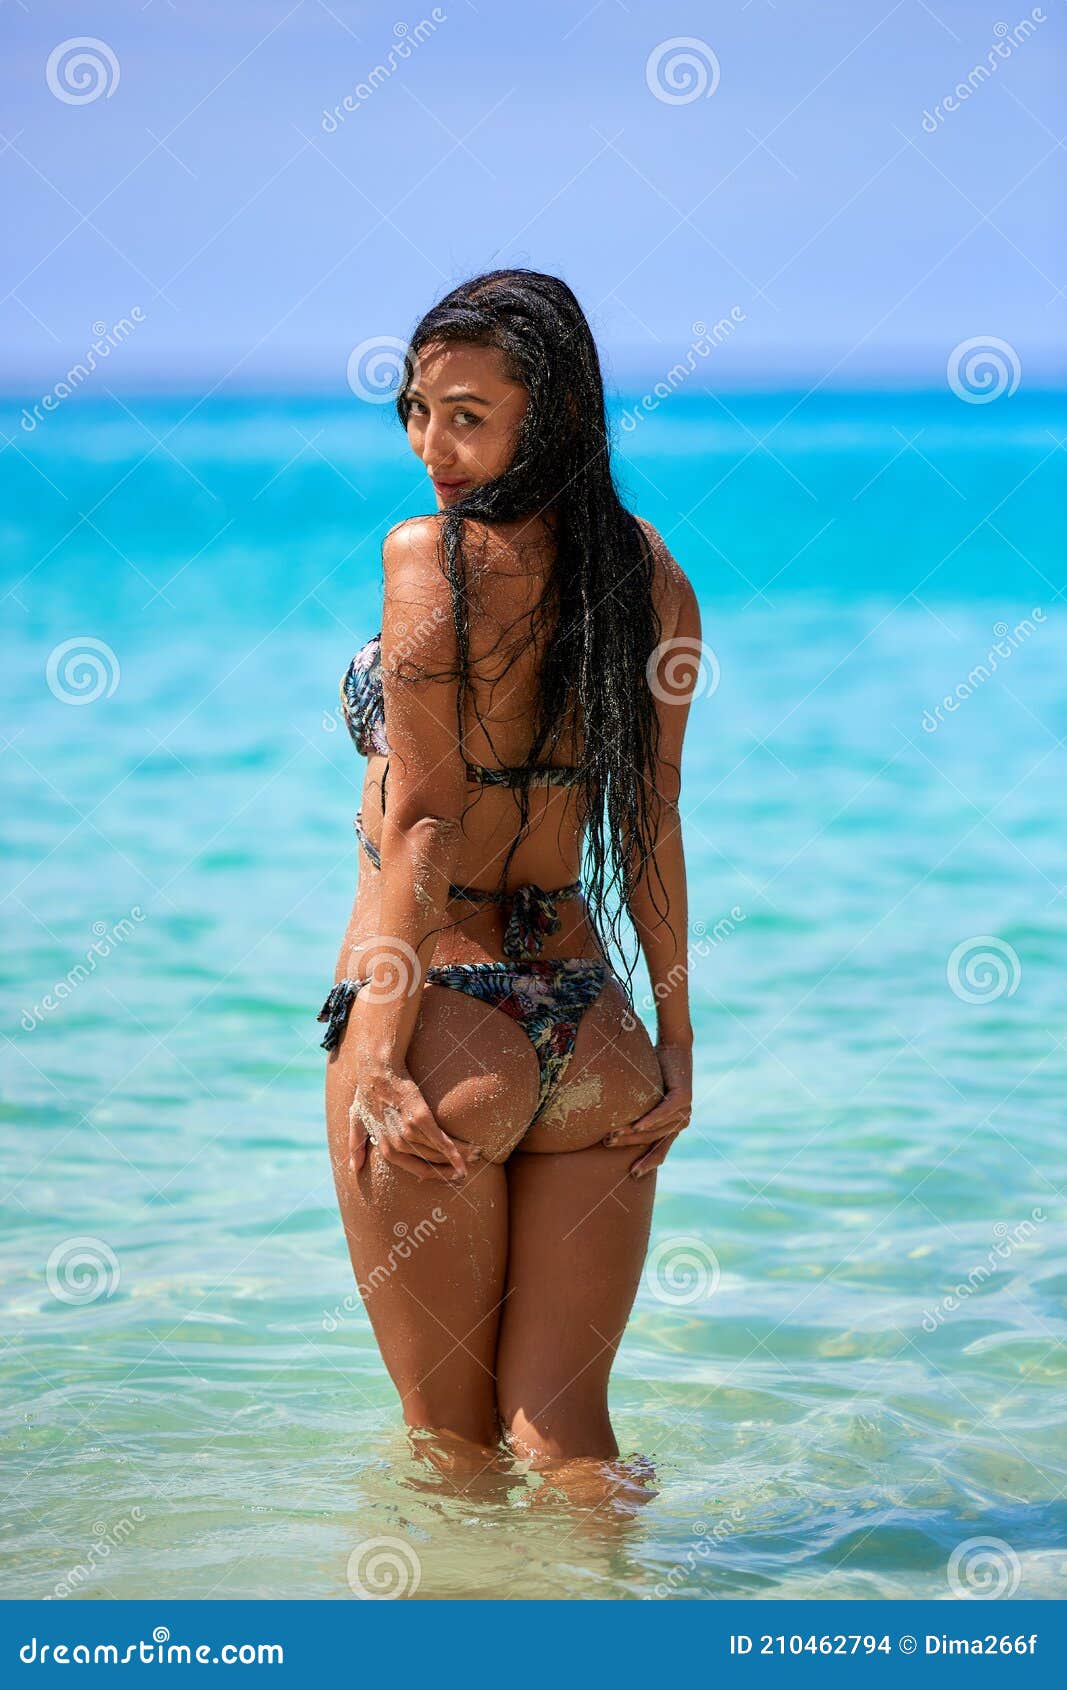 brandon mickelsen add sexy babes on the beach photo